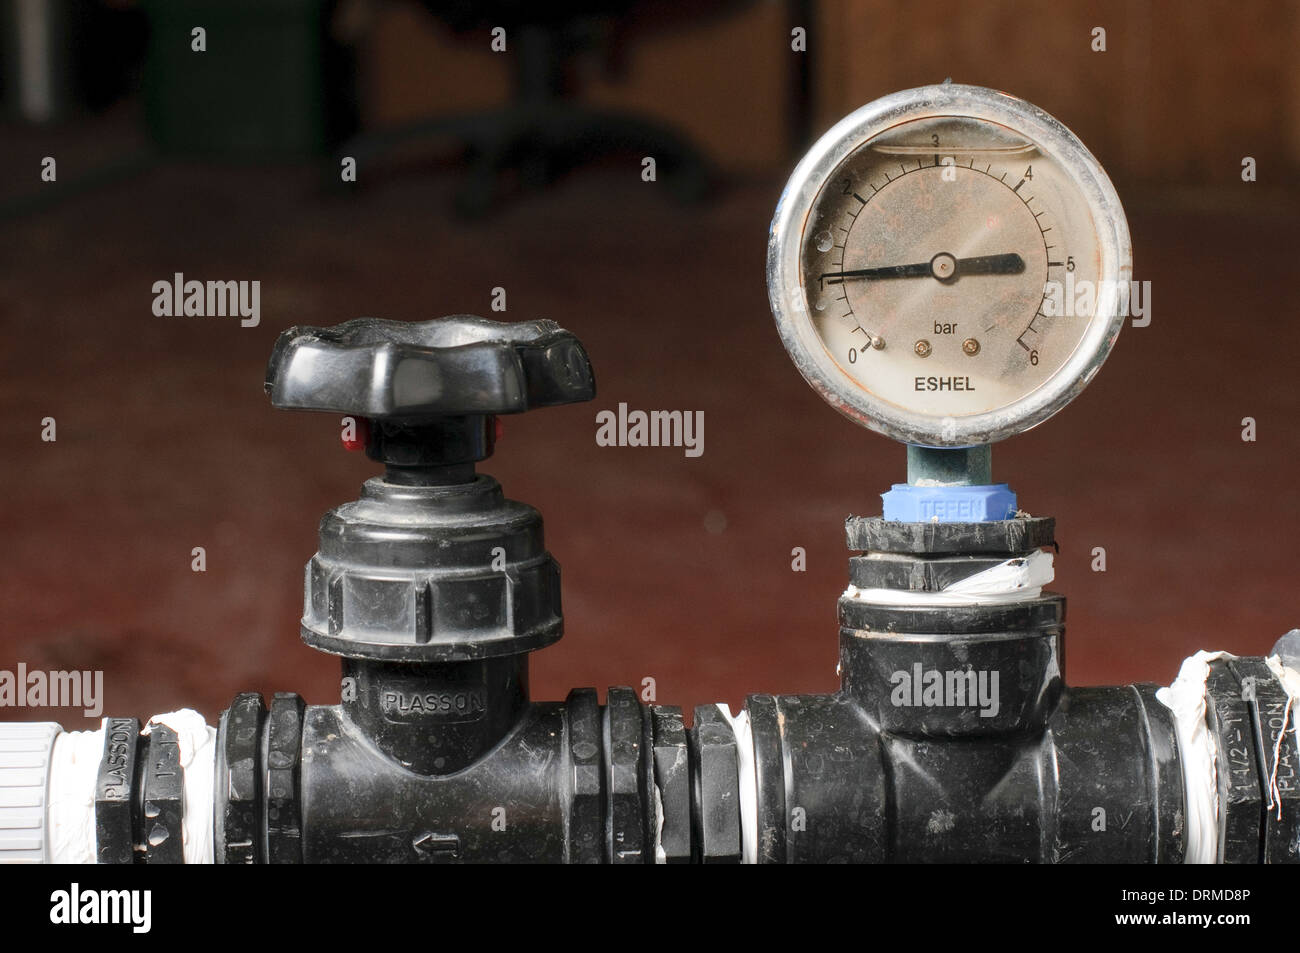 Medidor de presión de agua fotografías e imágenes de alta resolución - Alamy